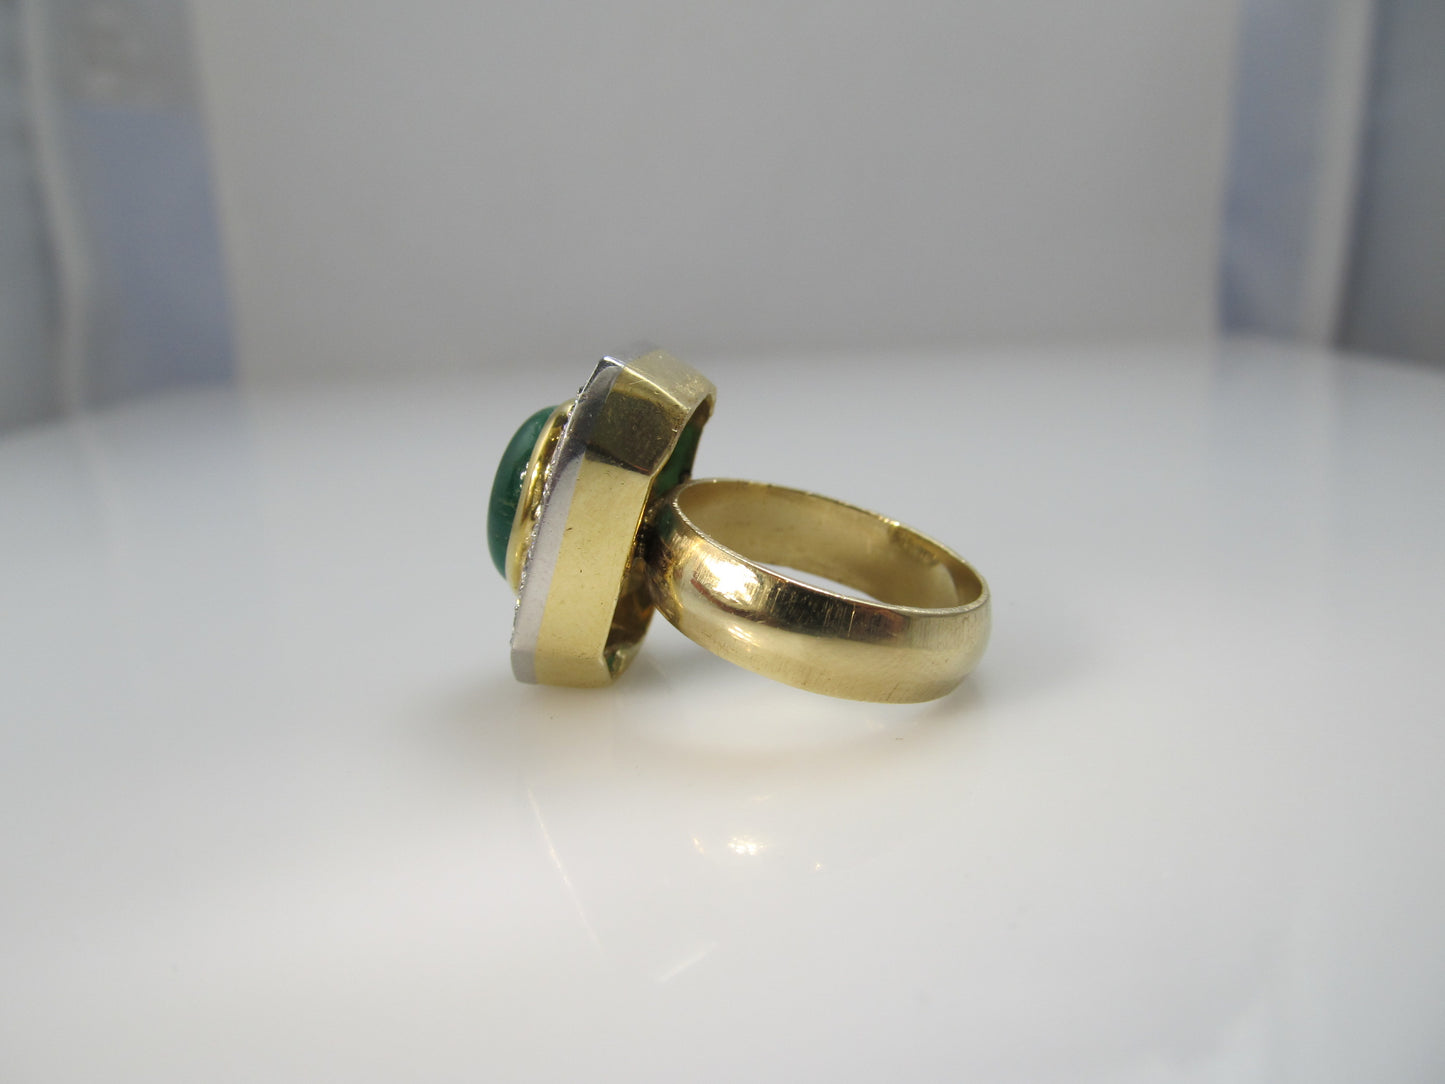 18k 2.50ct Cabochon Cut Emerald, 1.40ct Diamond Ring